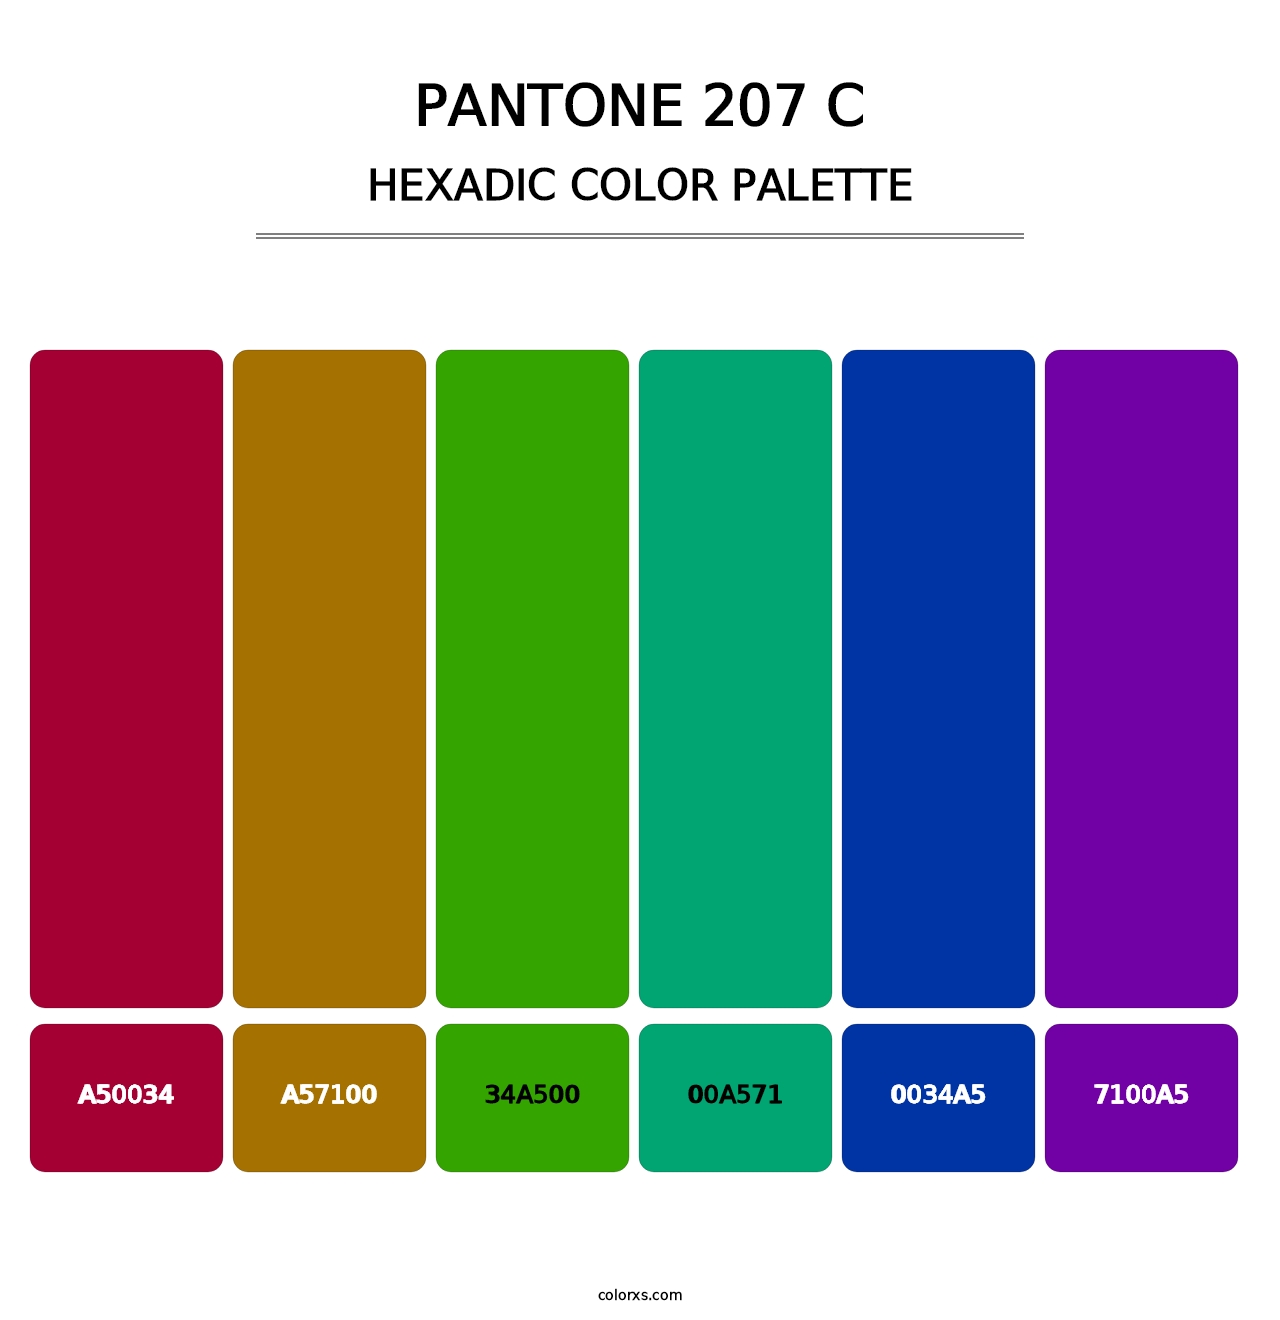 PANTONE 207 C - Hexadic Color Palette